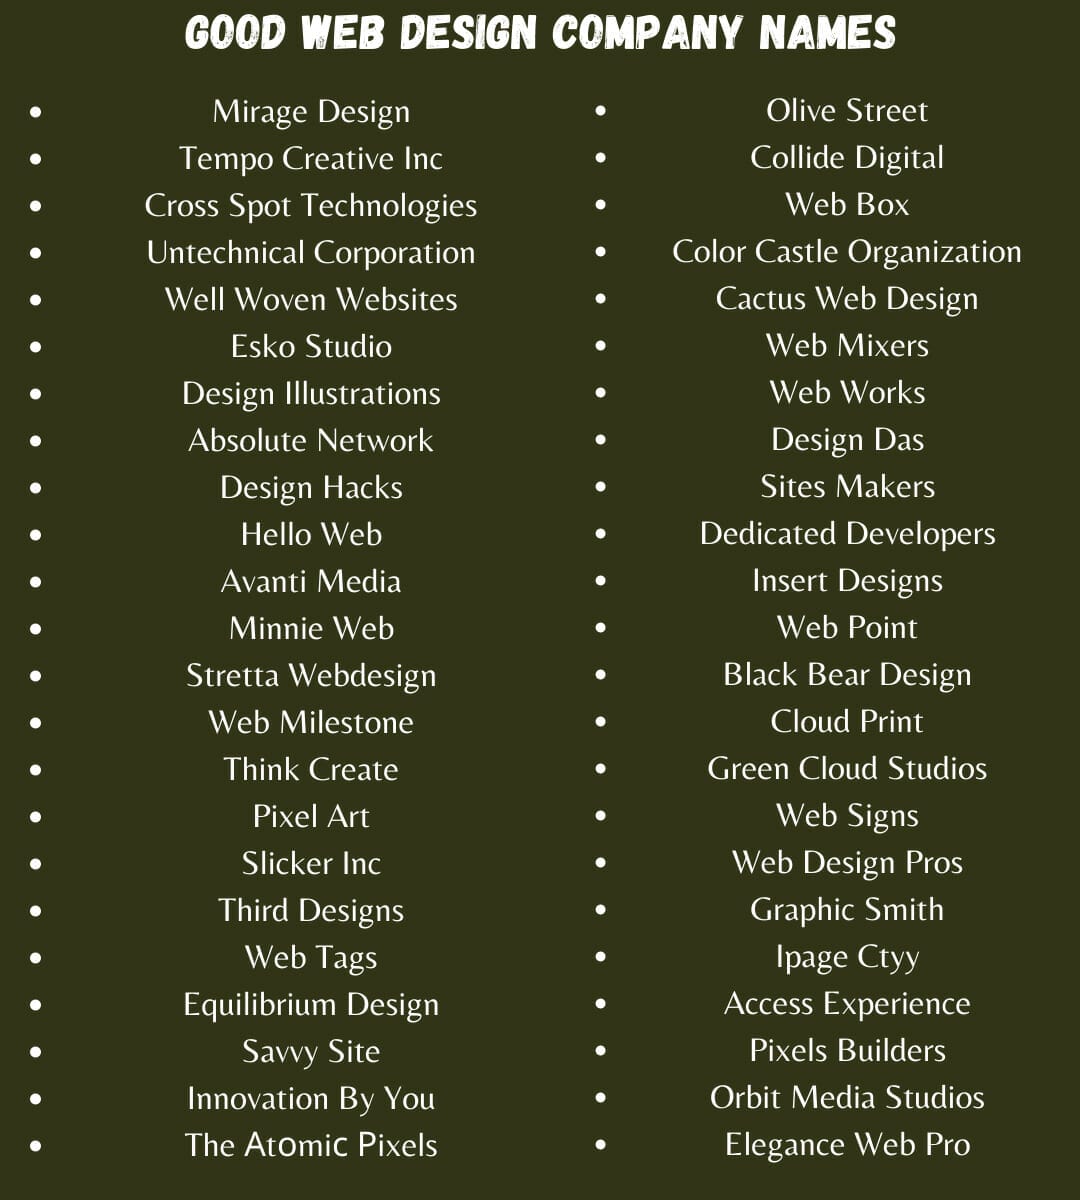 Good Web Design Company Names